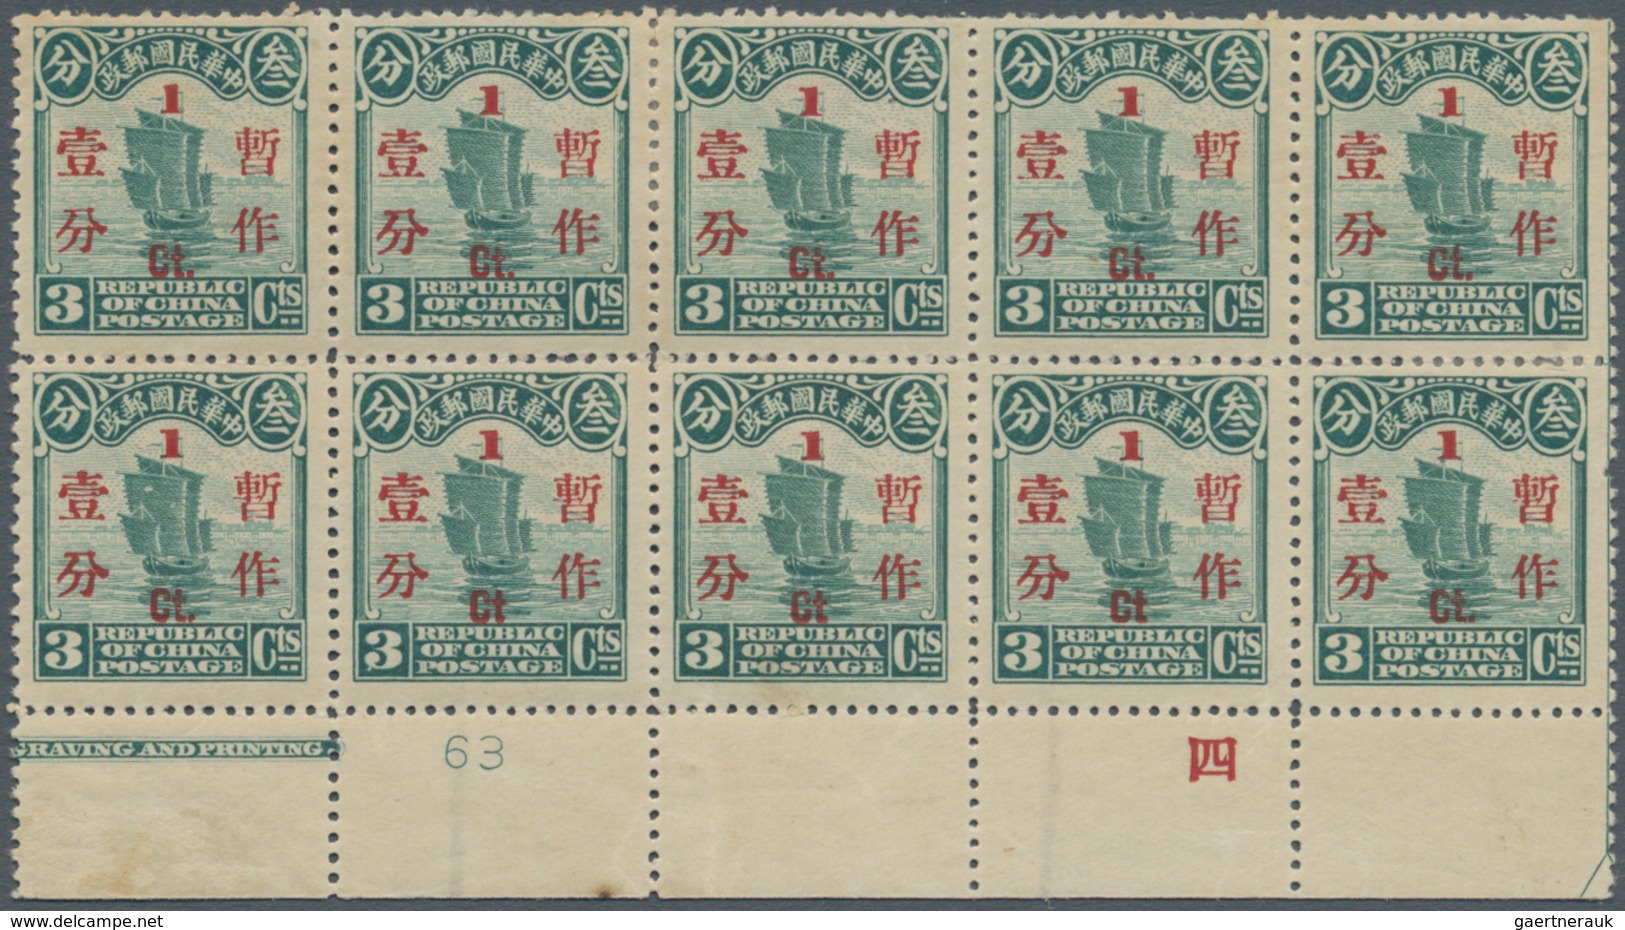 China: 1930, 2nd Peking Printing, Junk 1 C./3 C. Surcharge In Red, A Part-imprint Margin Block-10 In - 1912-1949 República